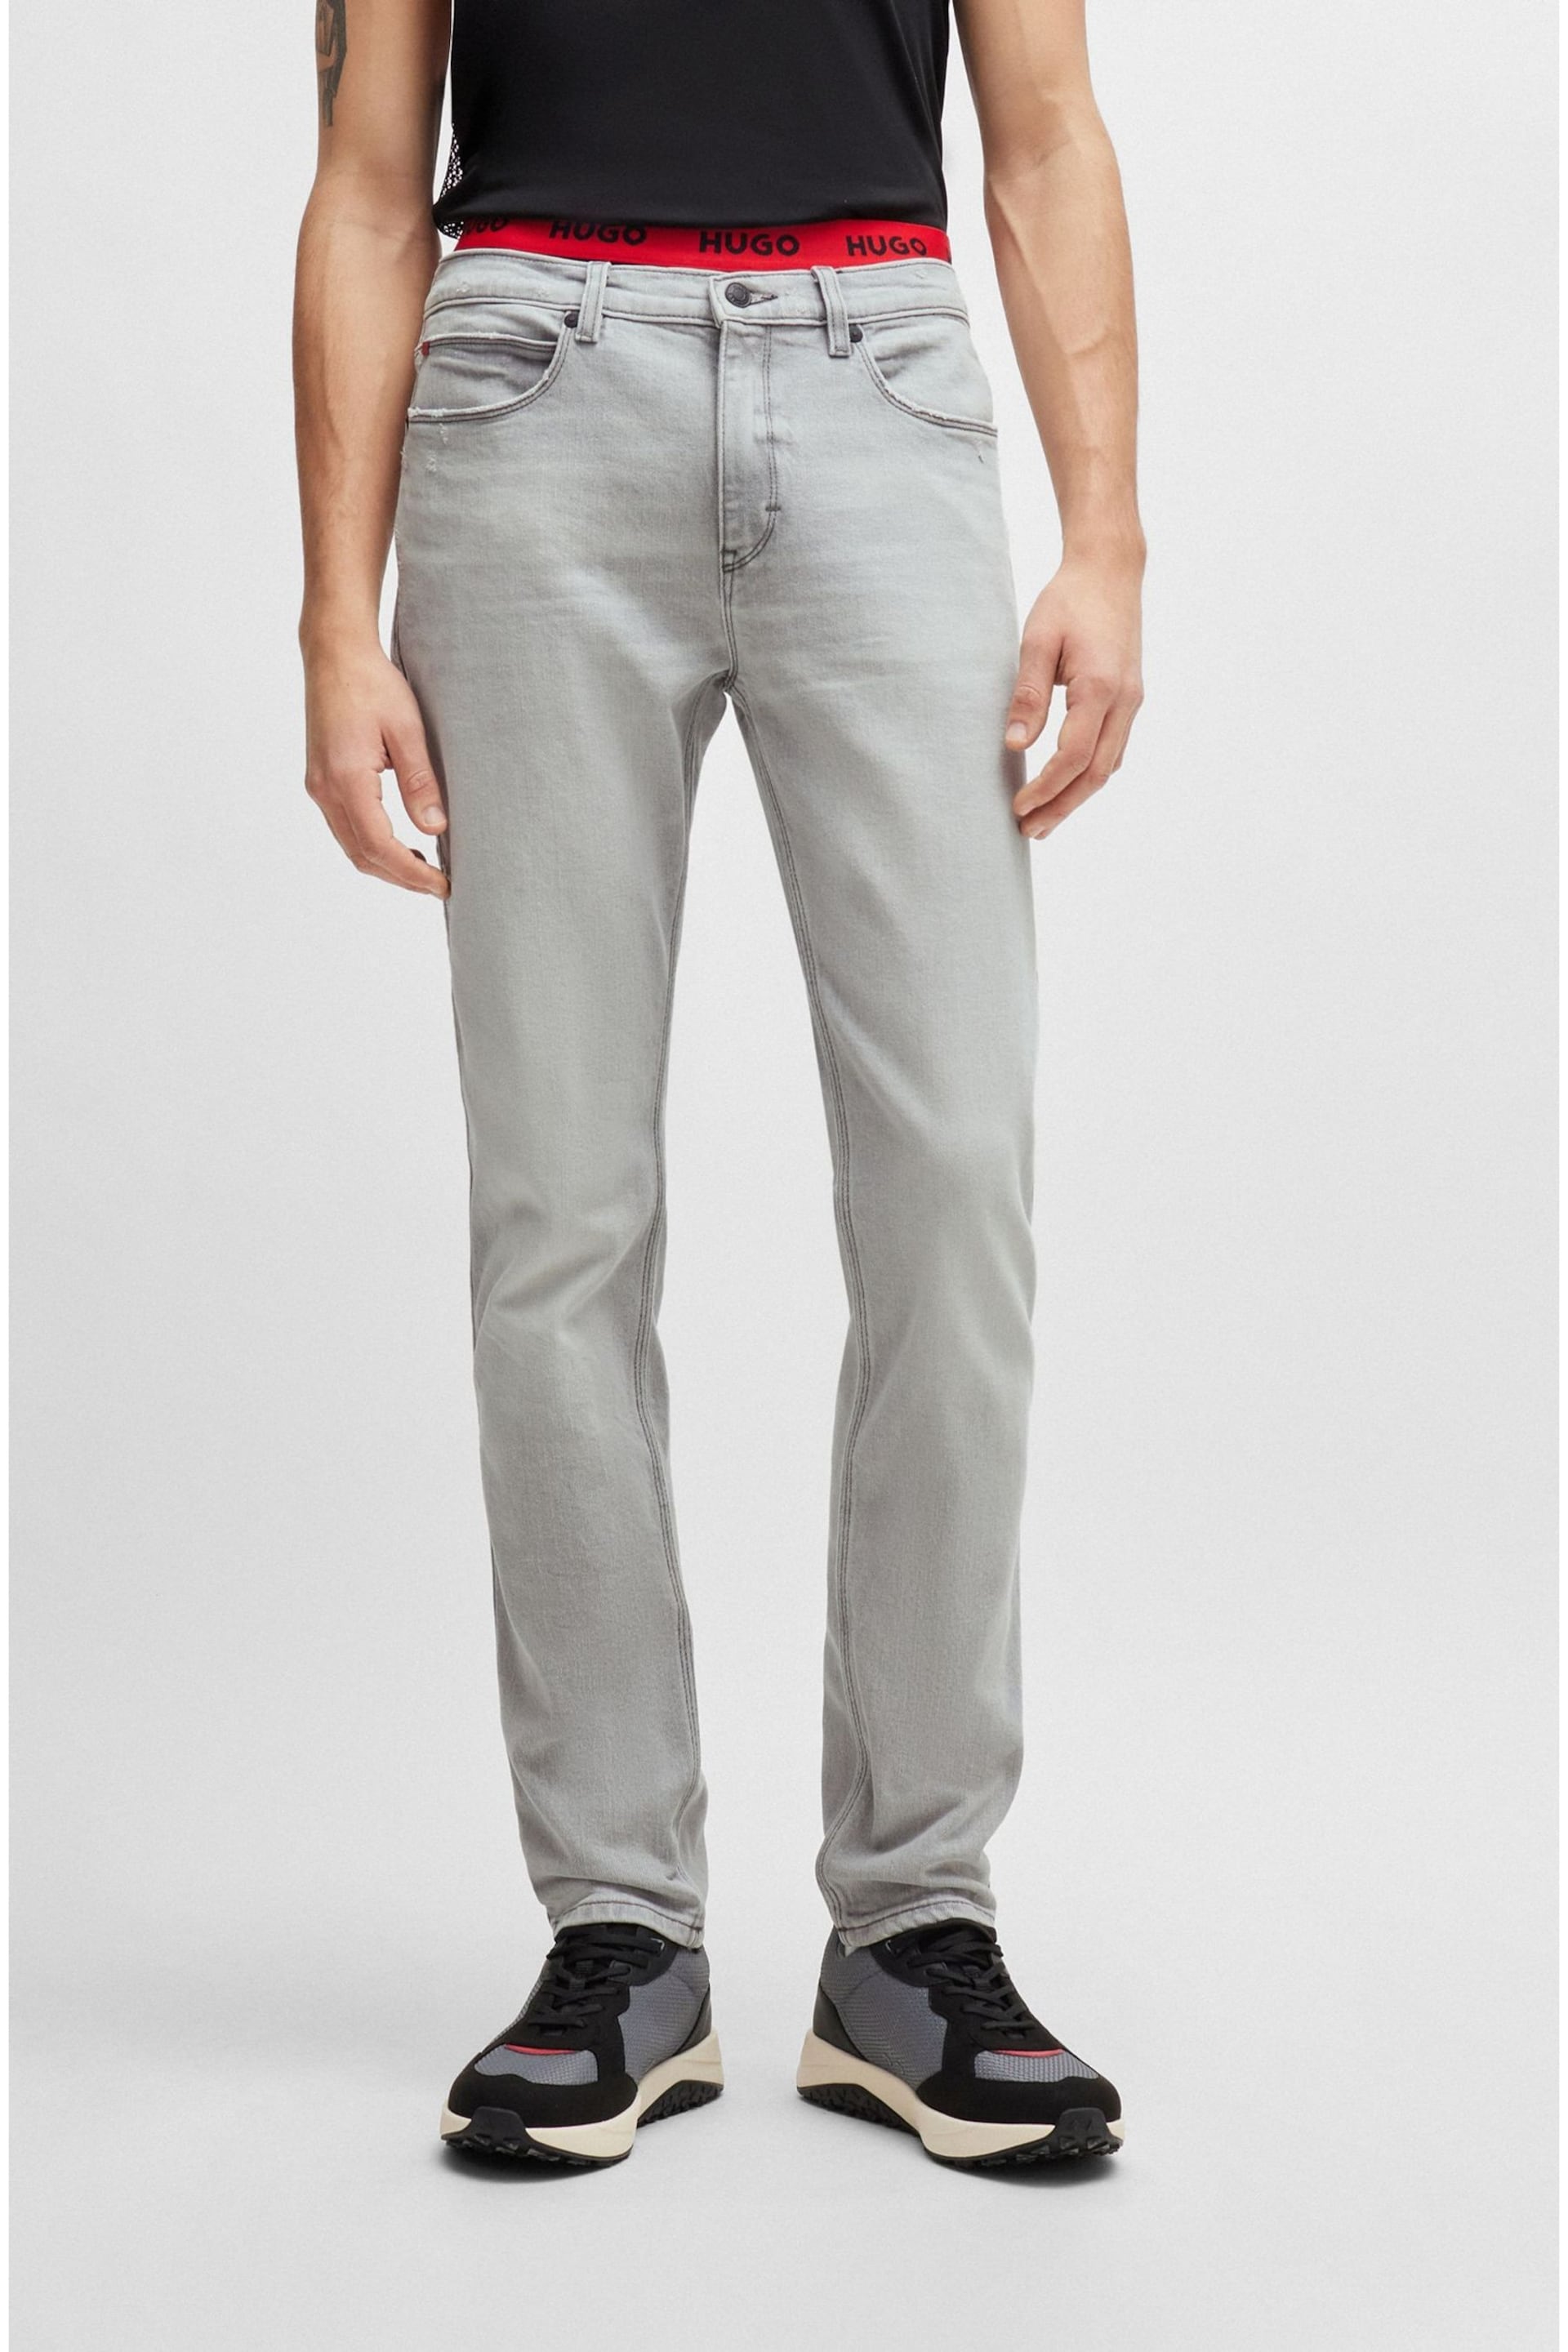 HUGO Grey Slim-Fit Jeans in Light-Grey Denim - Image 1 of 5